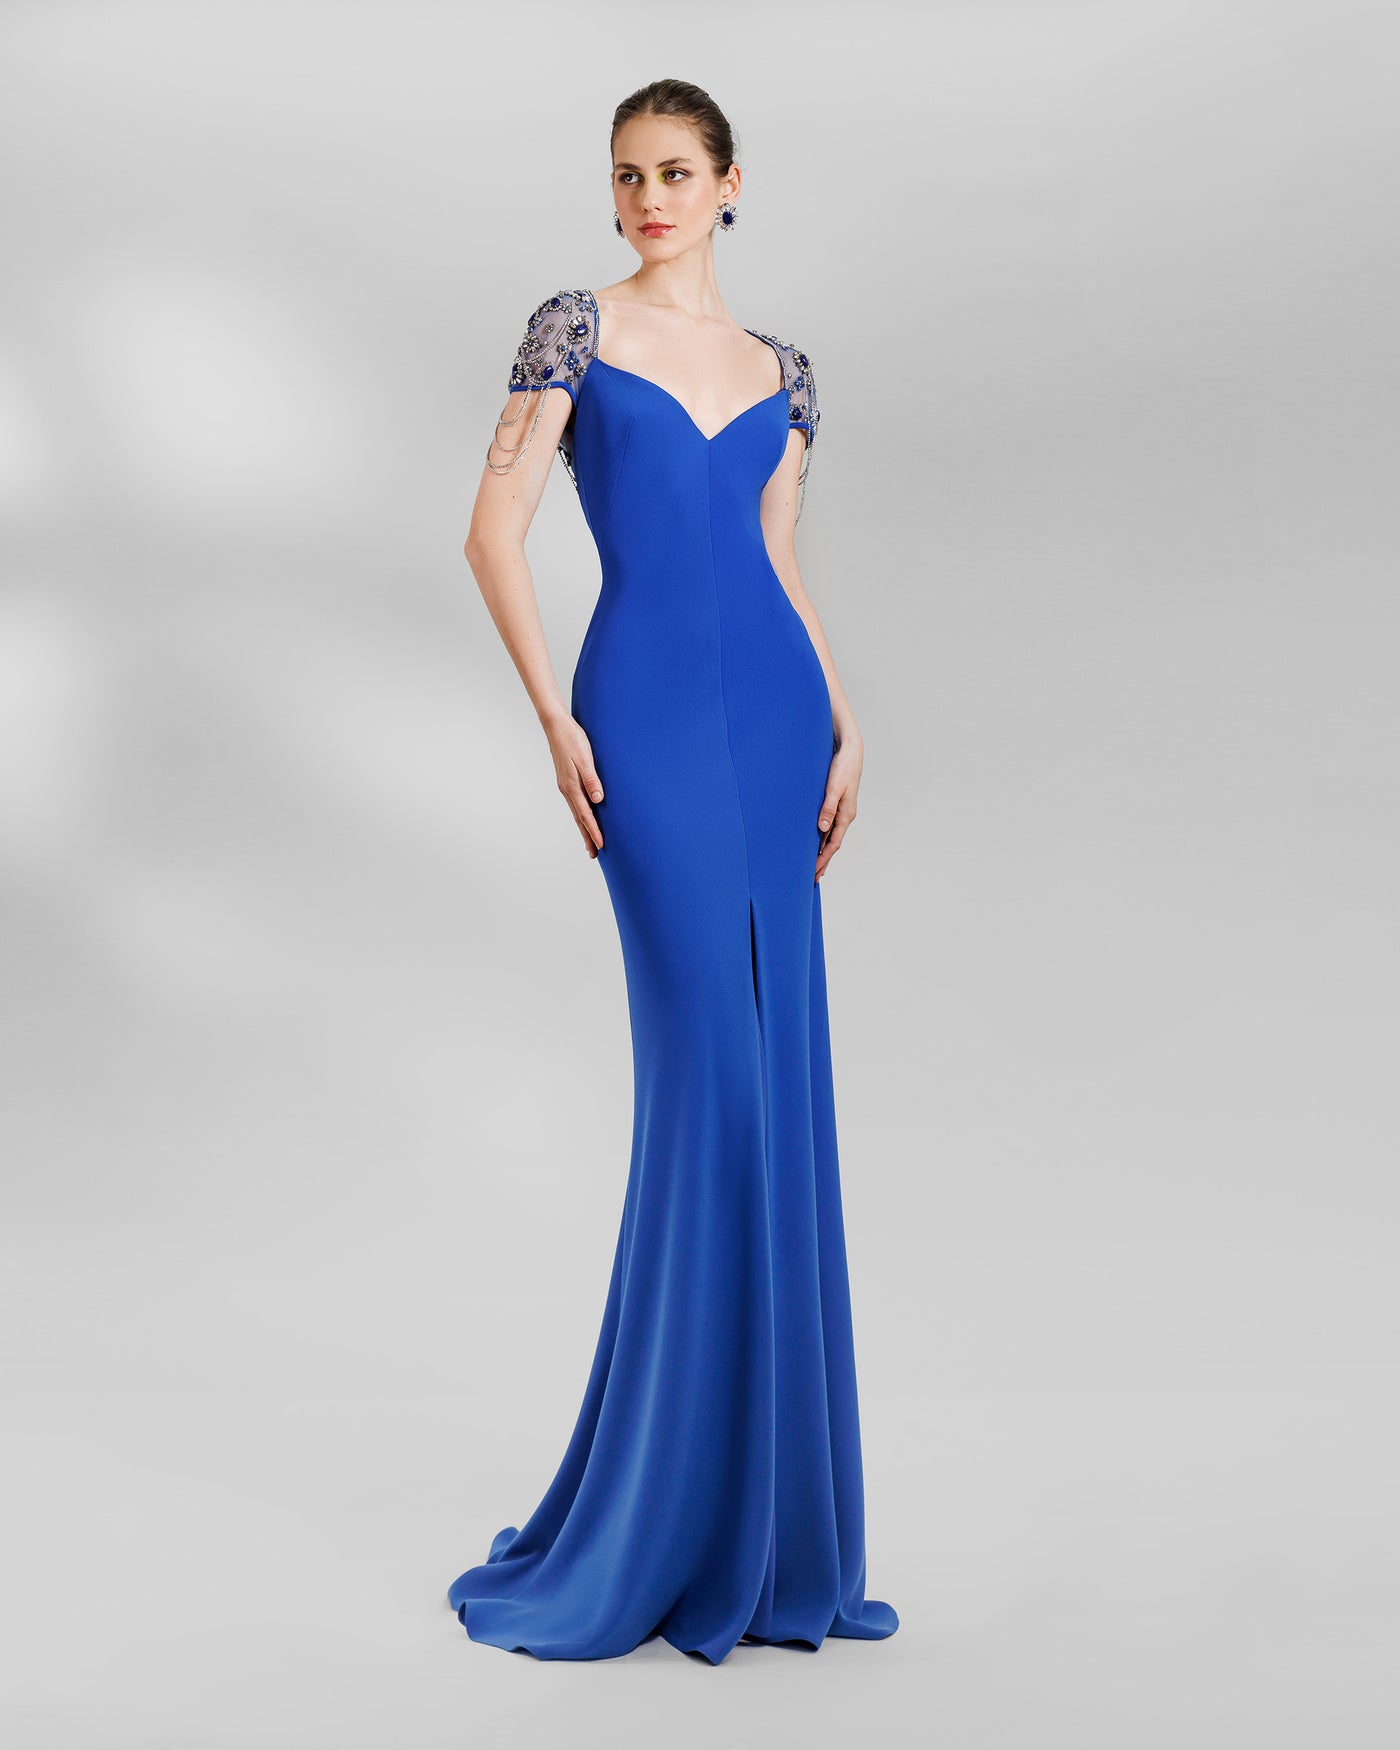 Royal Blue Sweetheart Neckline Slim-Cut Dress